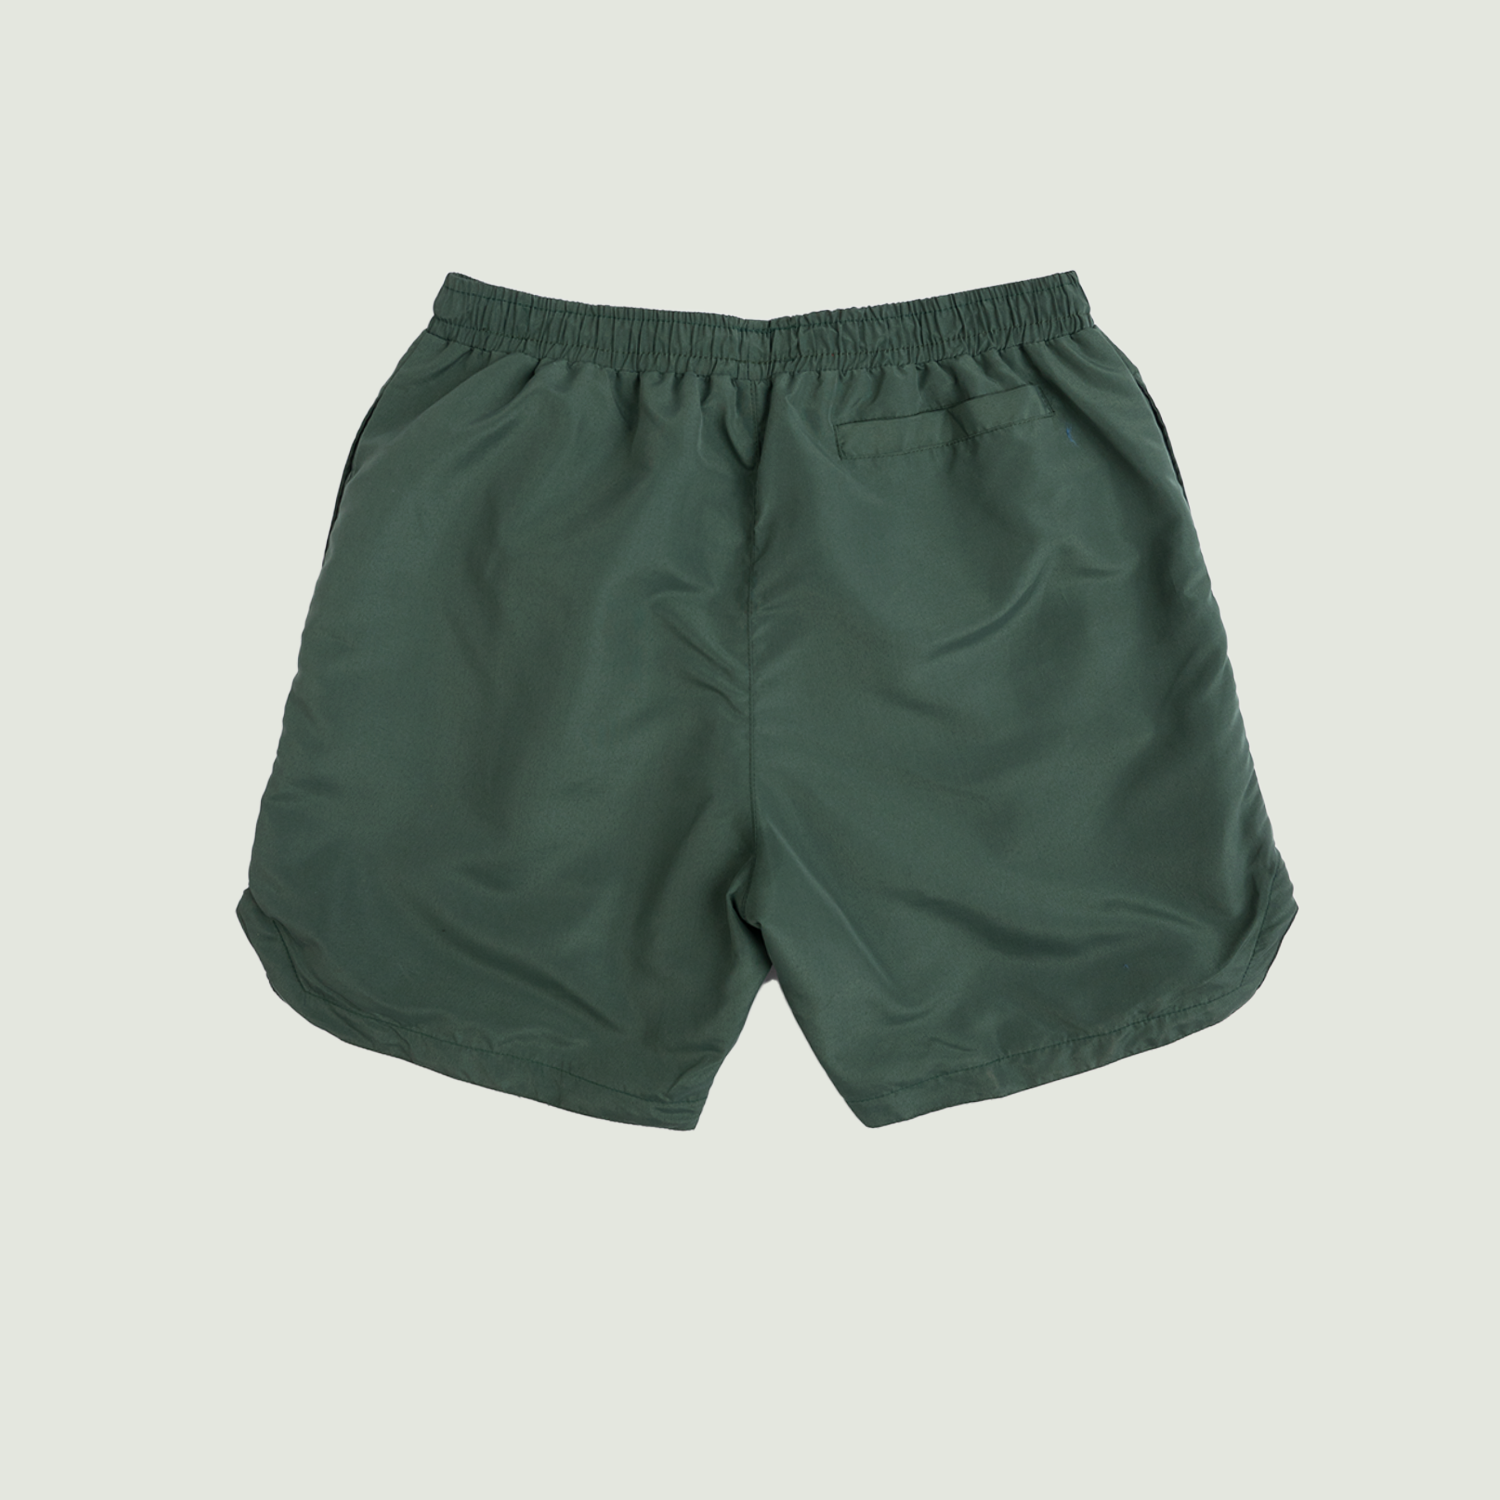 Fishing Club Nylon Shorts in Army Green